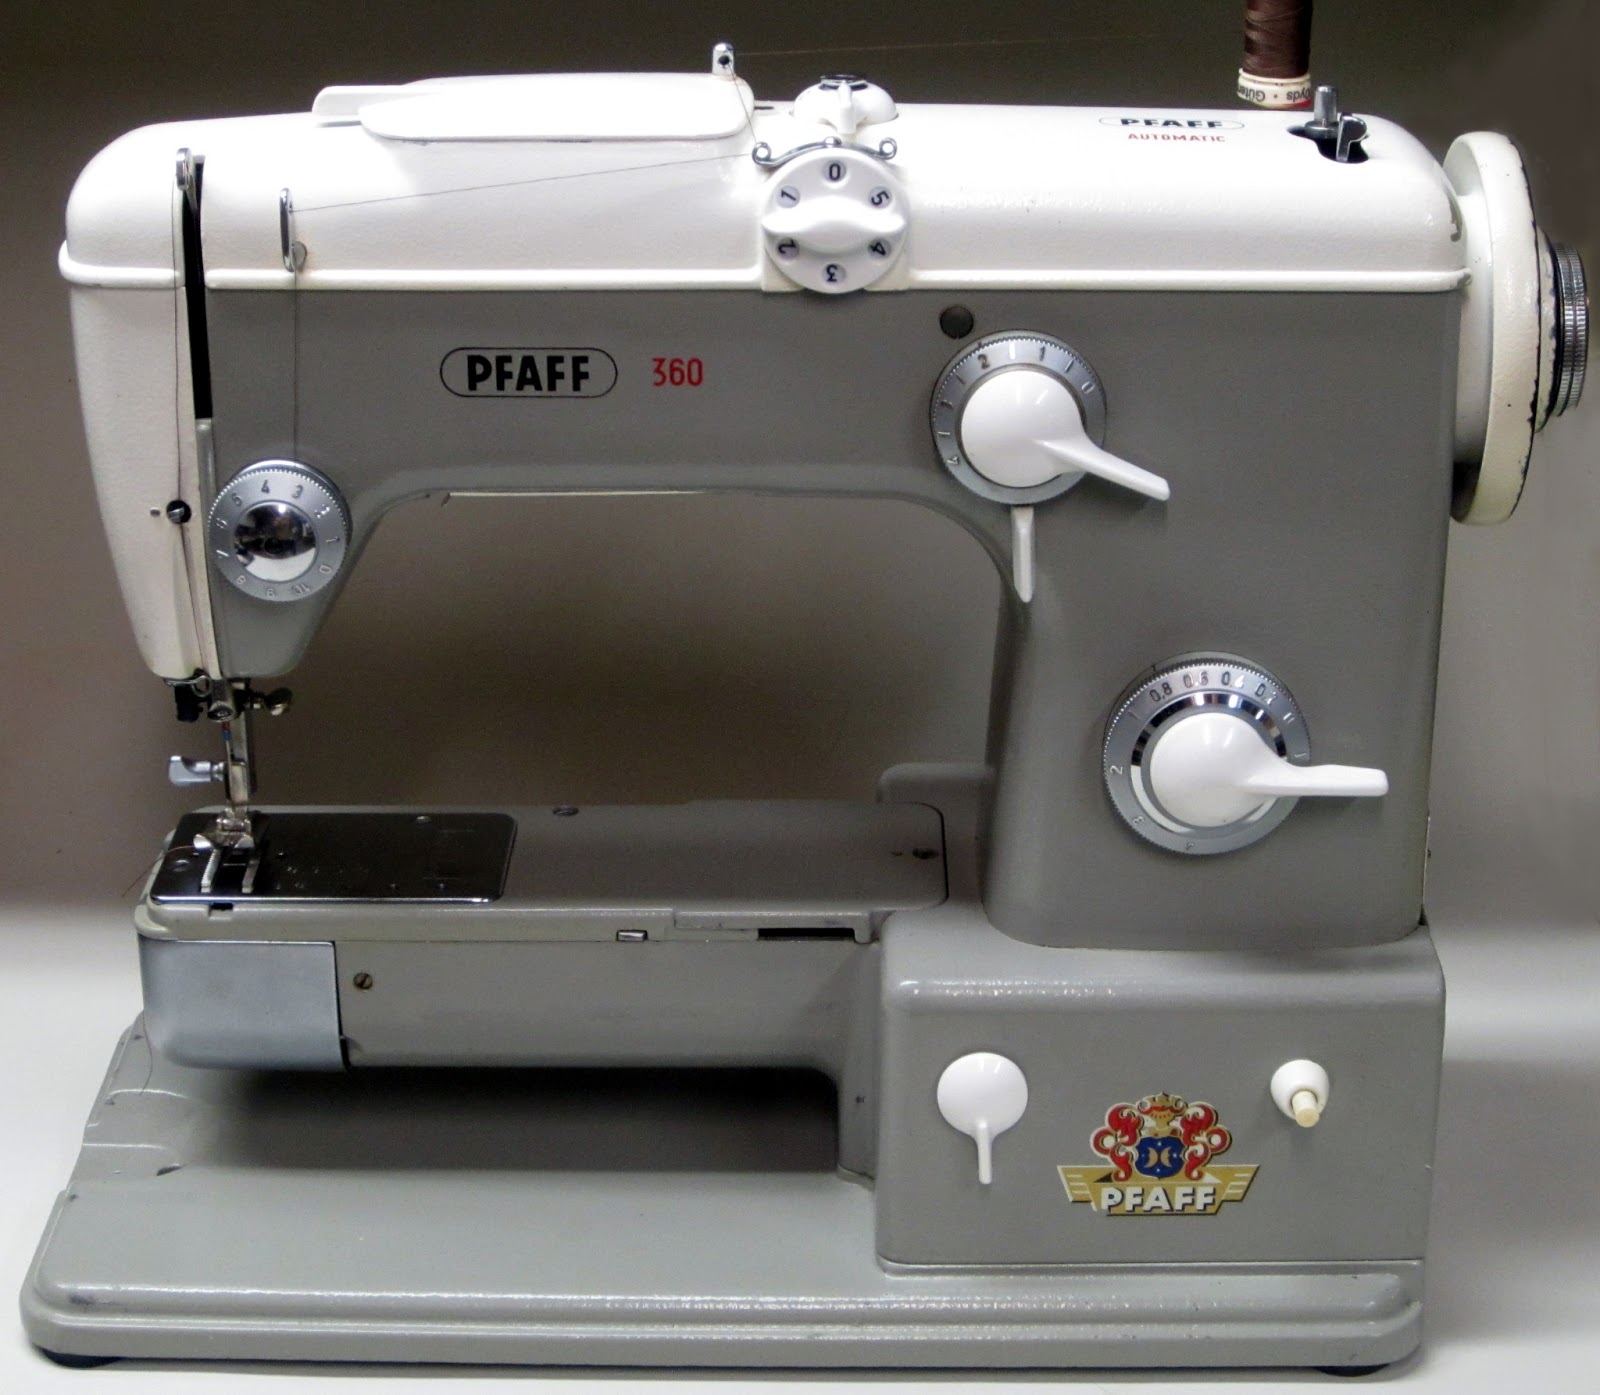 MI Vintage Sewing Machines: Elna Special (1969)